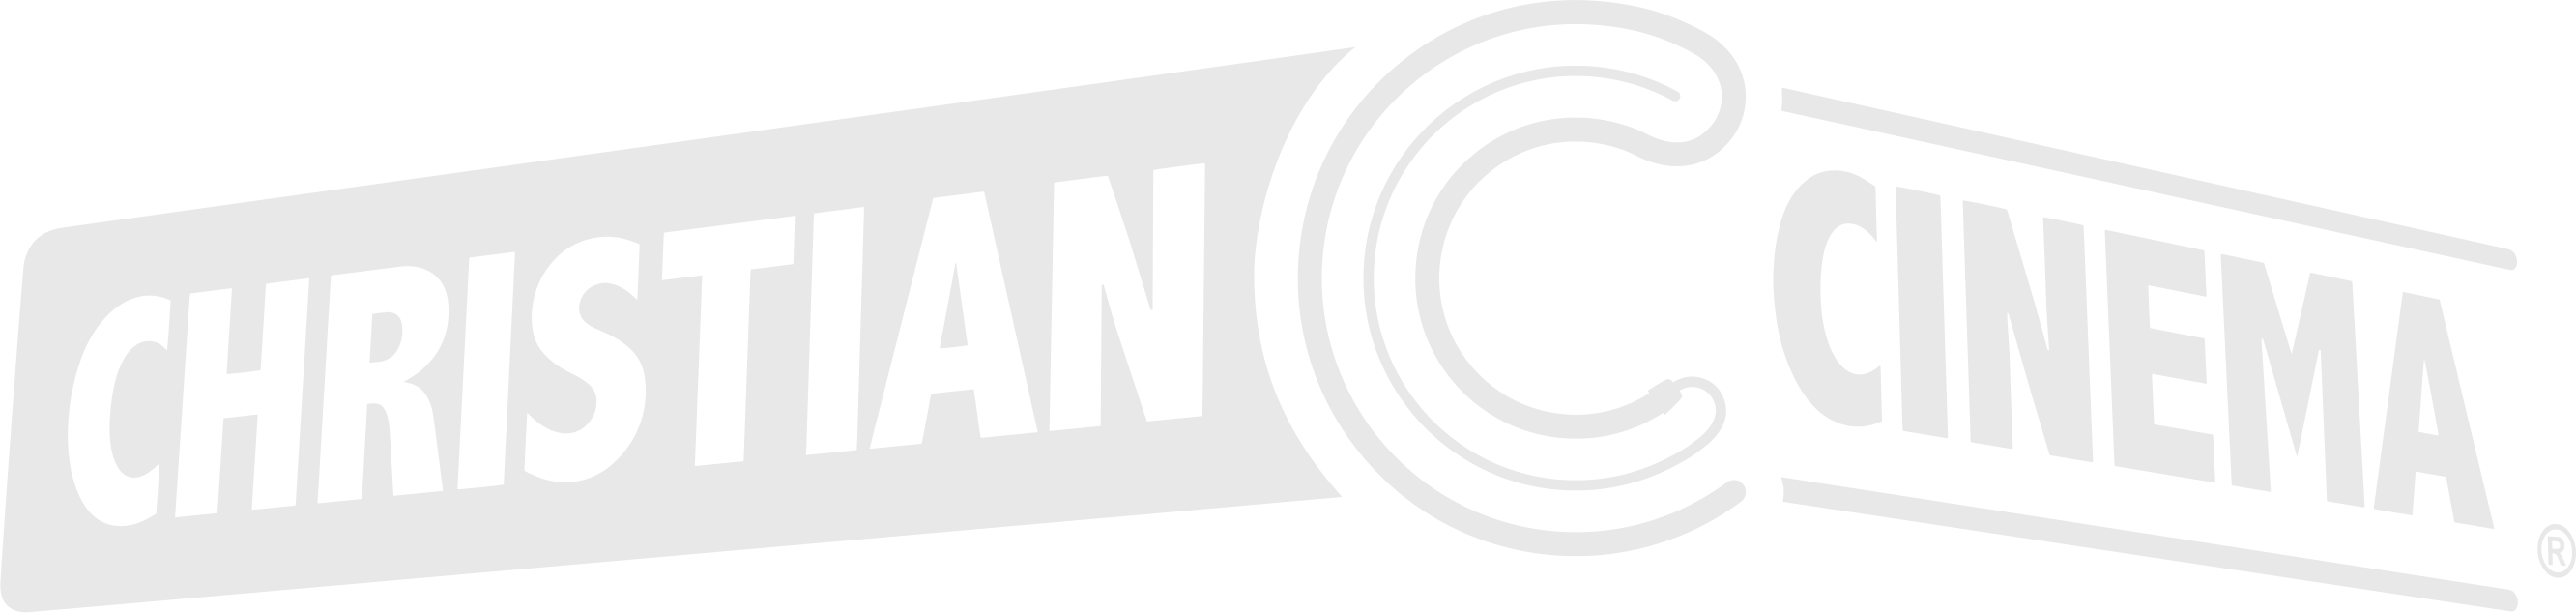 ChristianCinema_logo